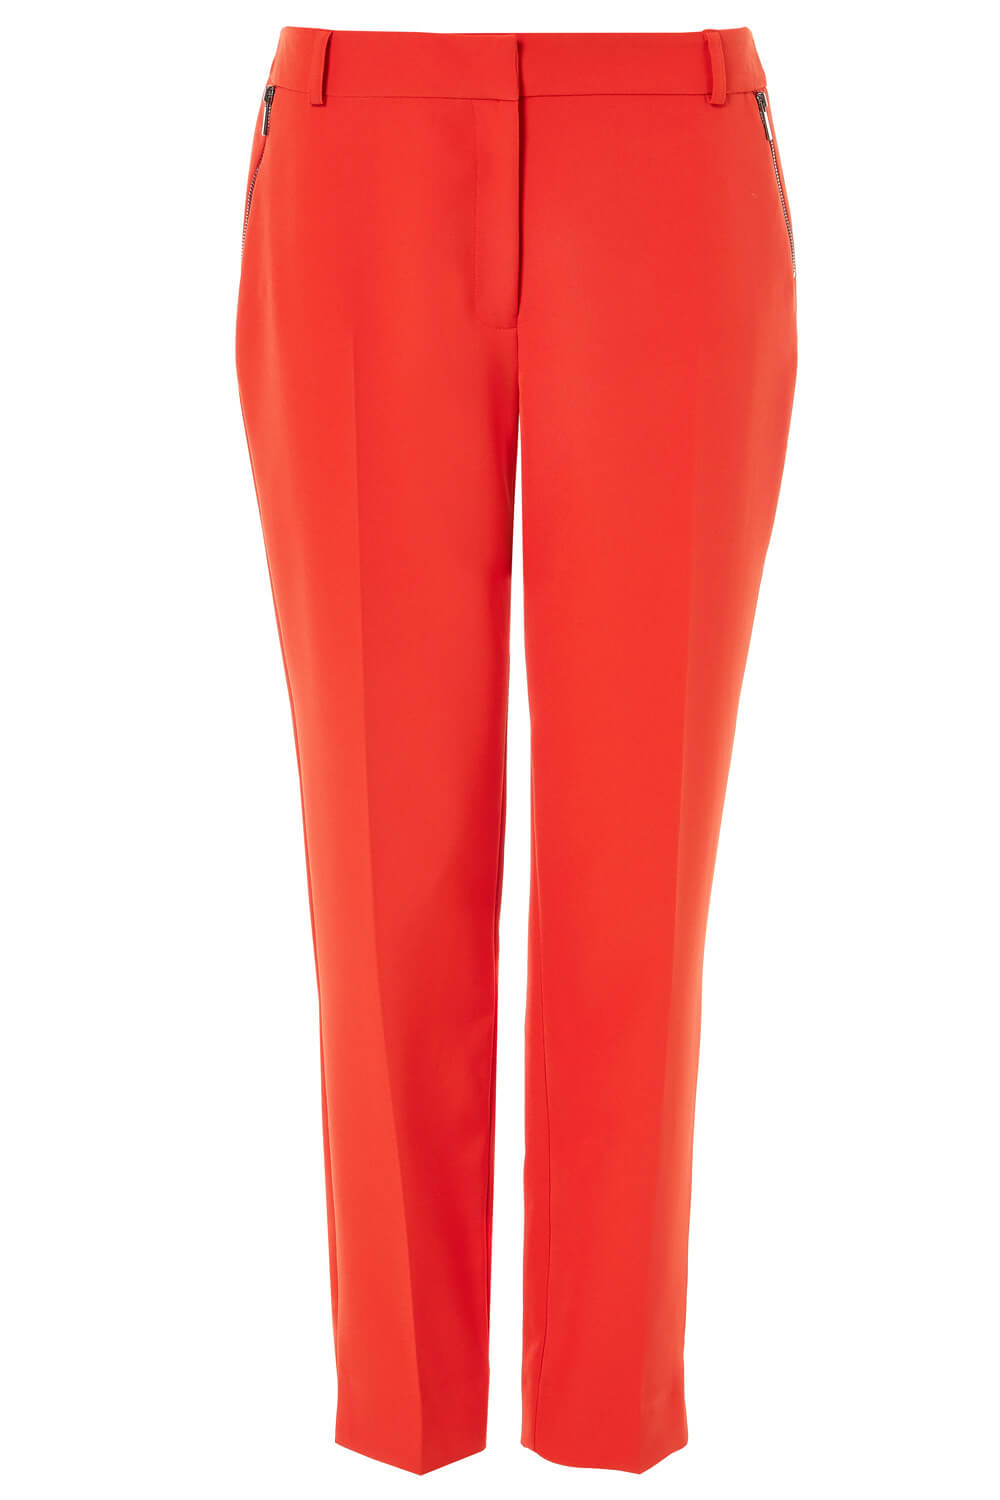 Dark Orange Straight Leg Zip Pocket Trousers, Image 5 of 5